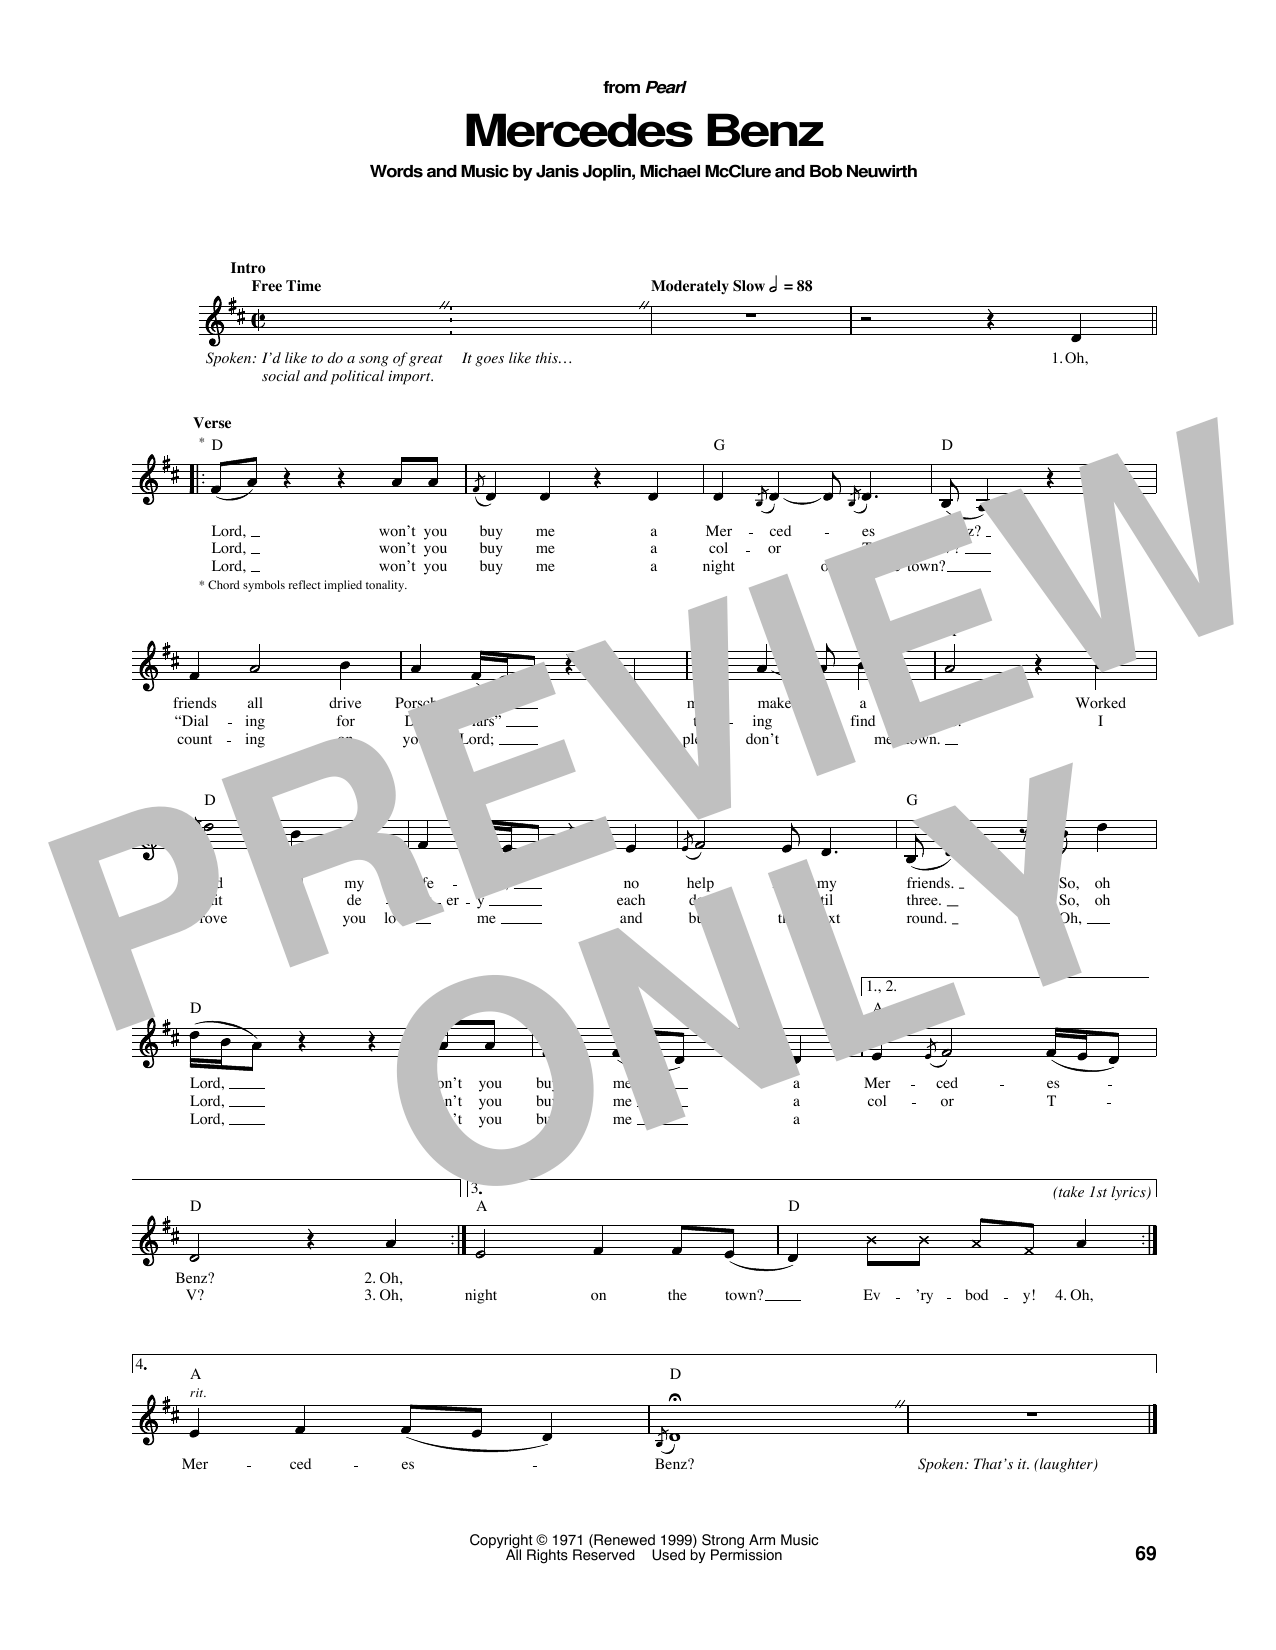 Janis Joplin Mercedes Benz Sheet Music Notes & Chords for Guitar Tab - Download or Print PDF